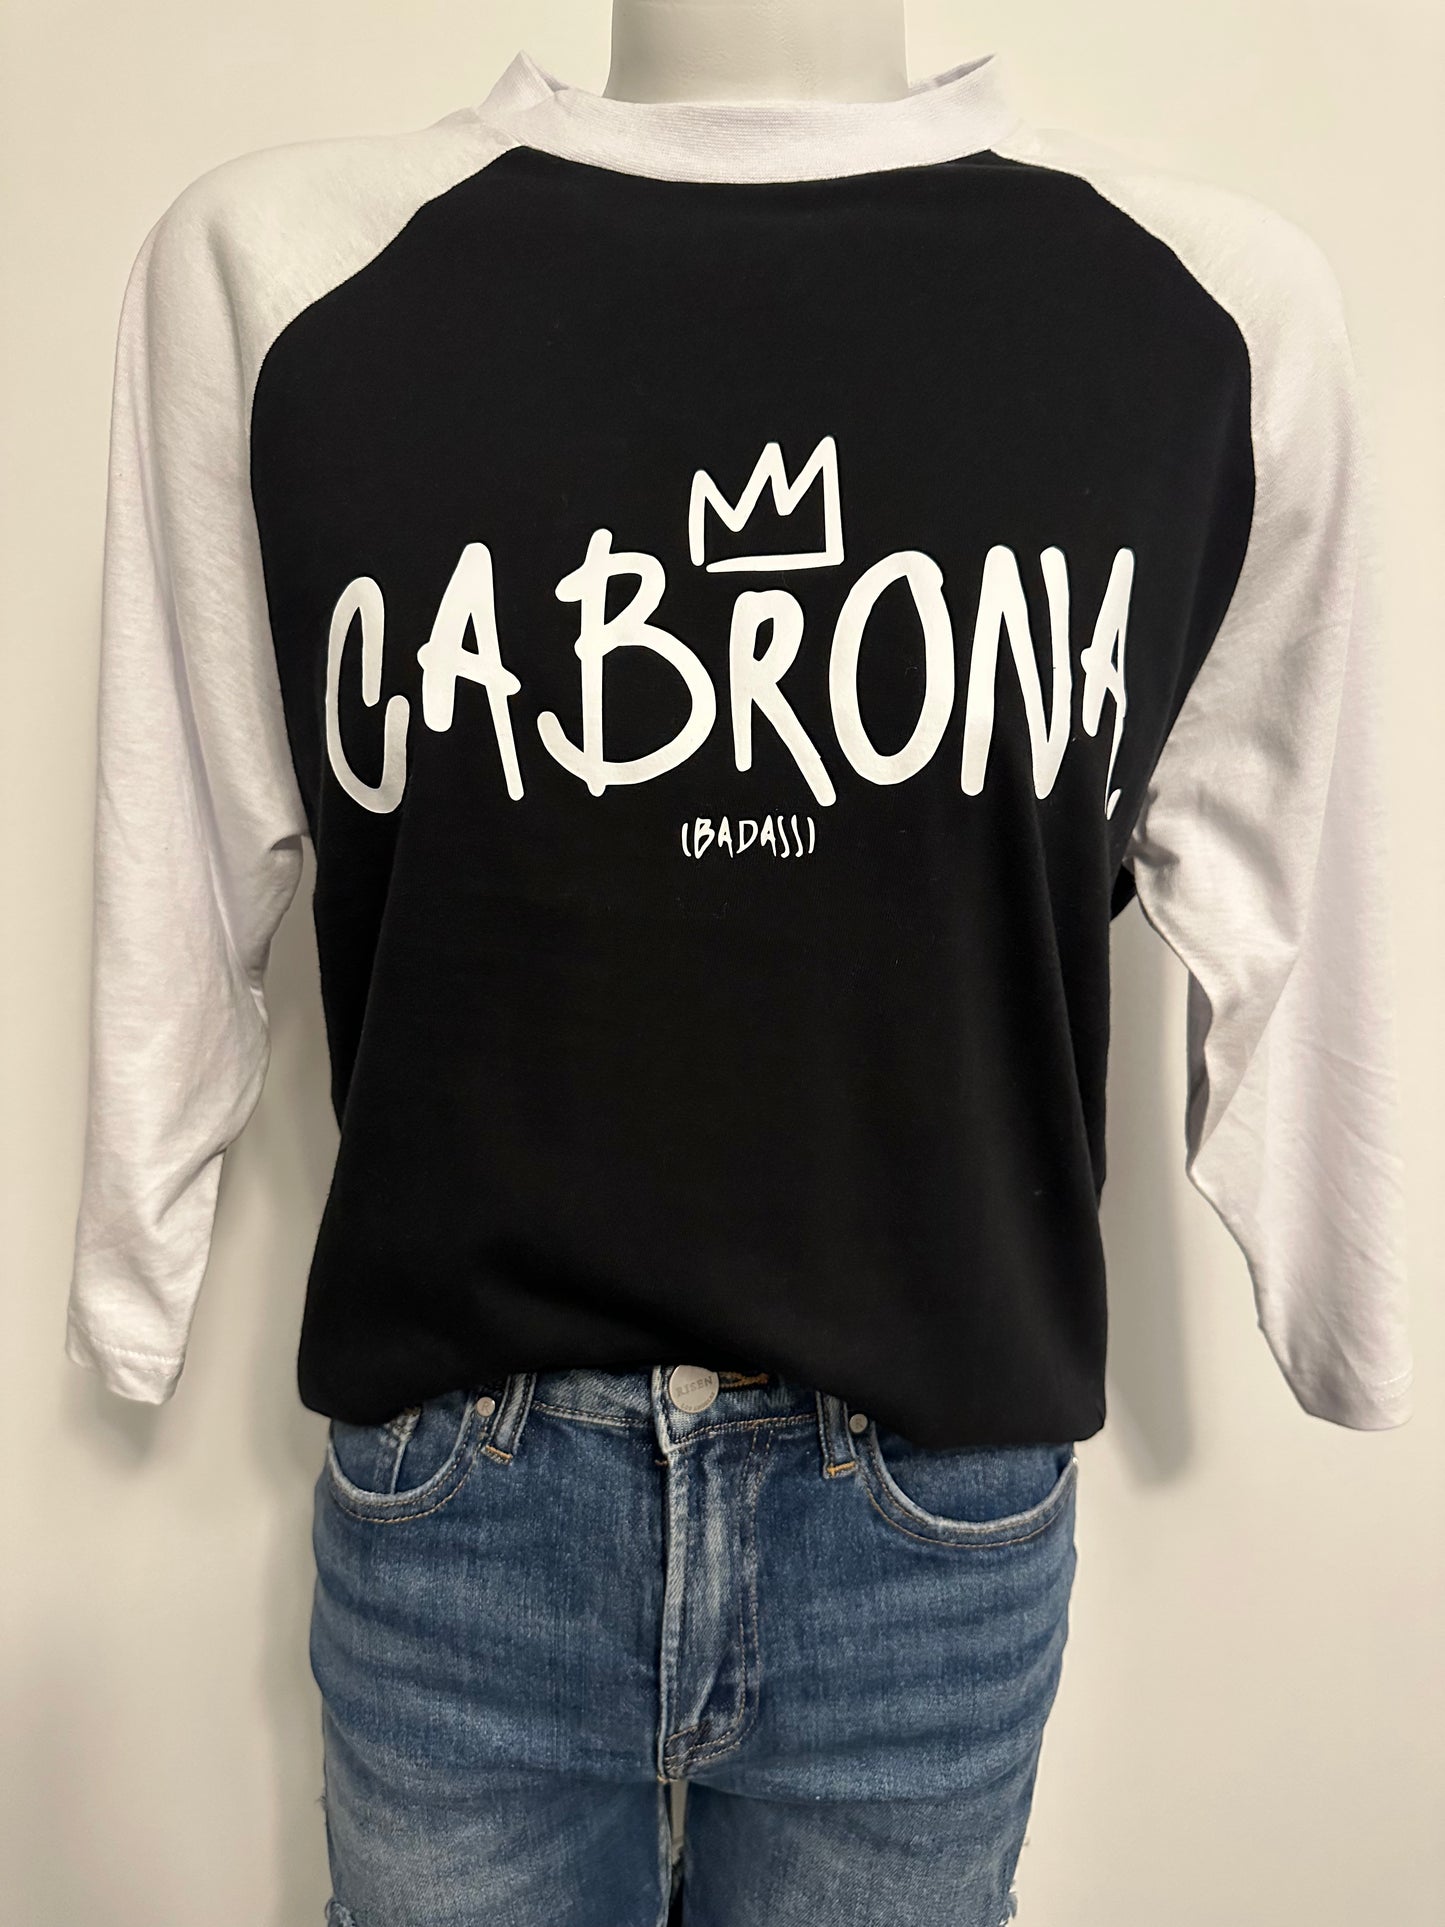 The Cabrona (Badd Ass)